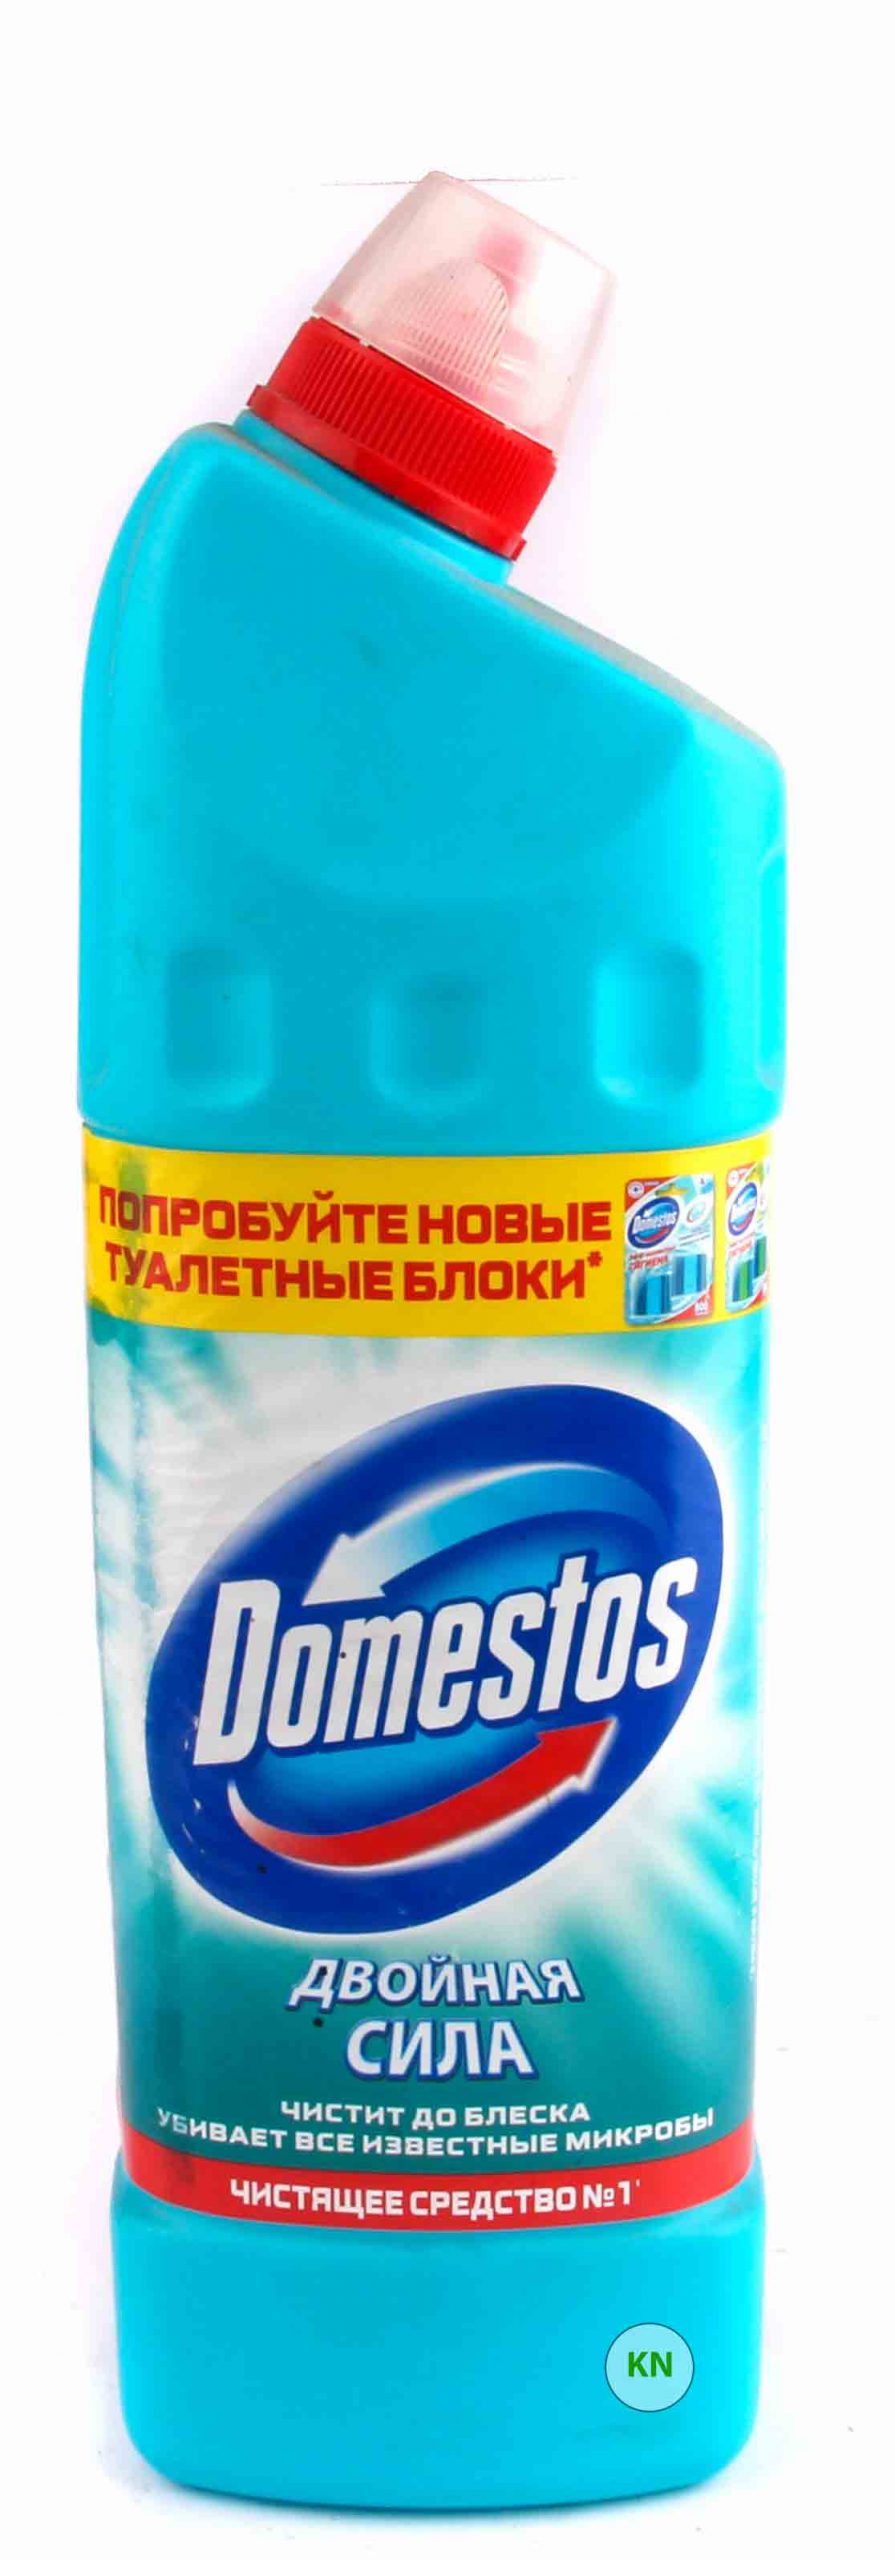 Средство для чистки санизделий "Domestos", 1000 мл